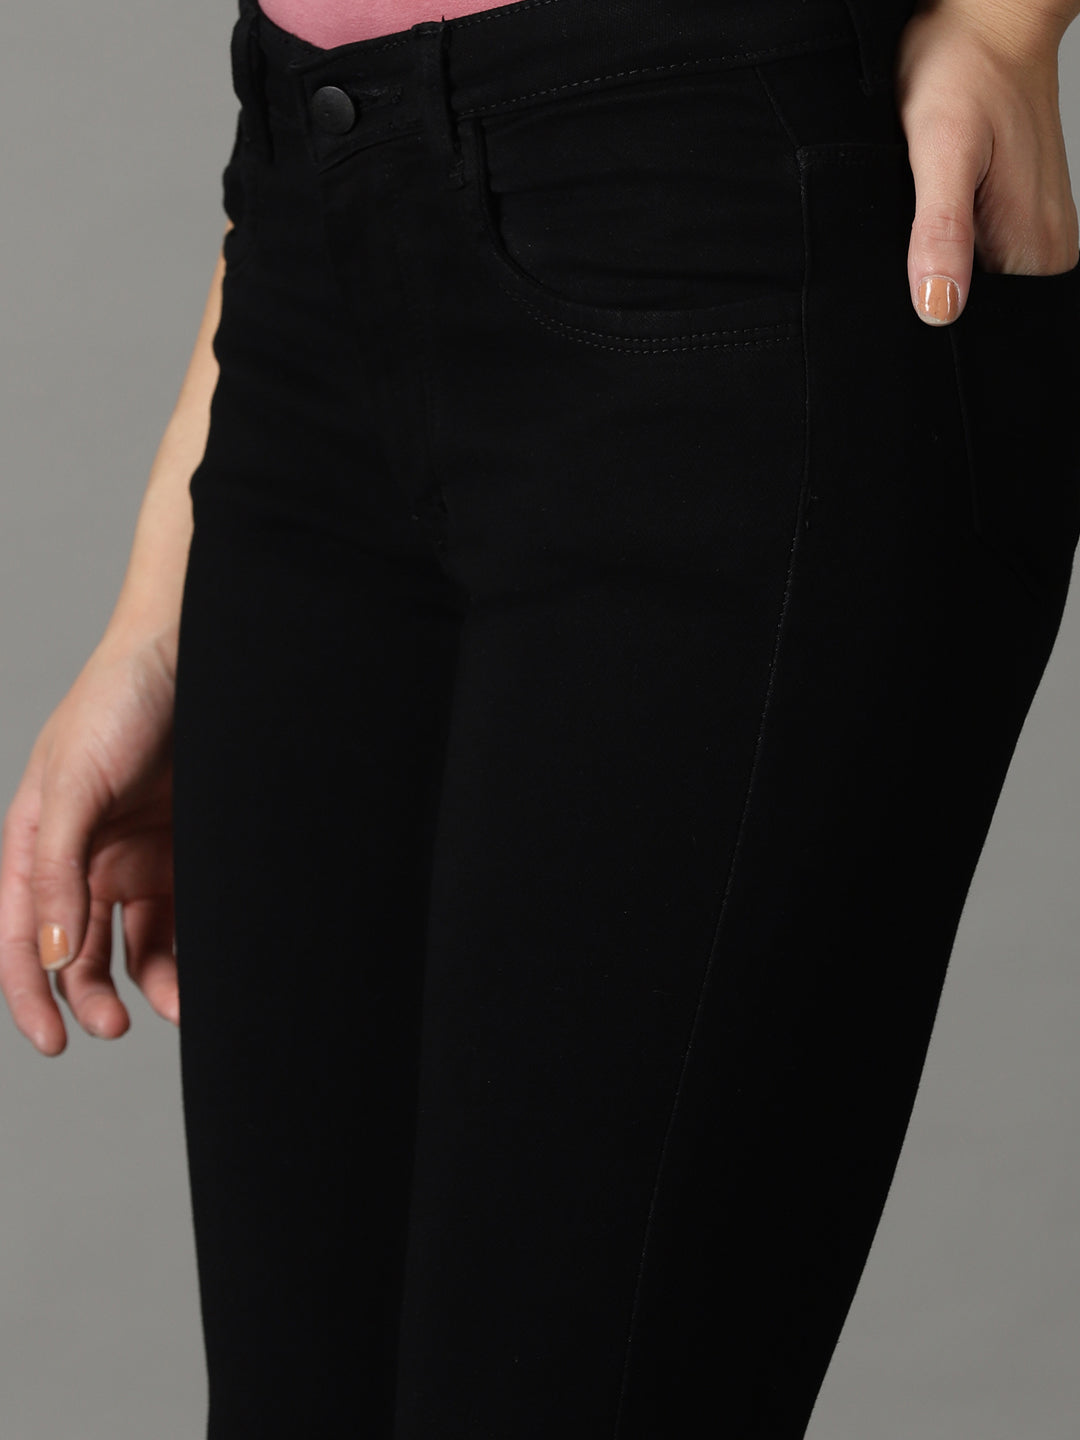 Women's Black Solid Bootcut Denim Jeans